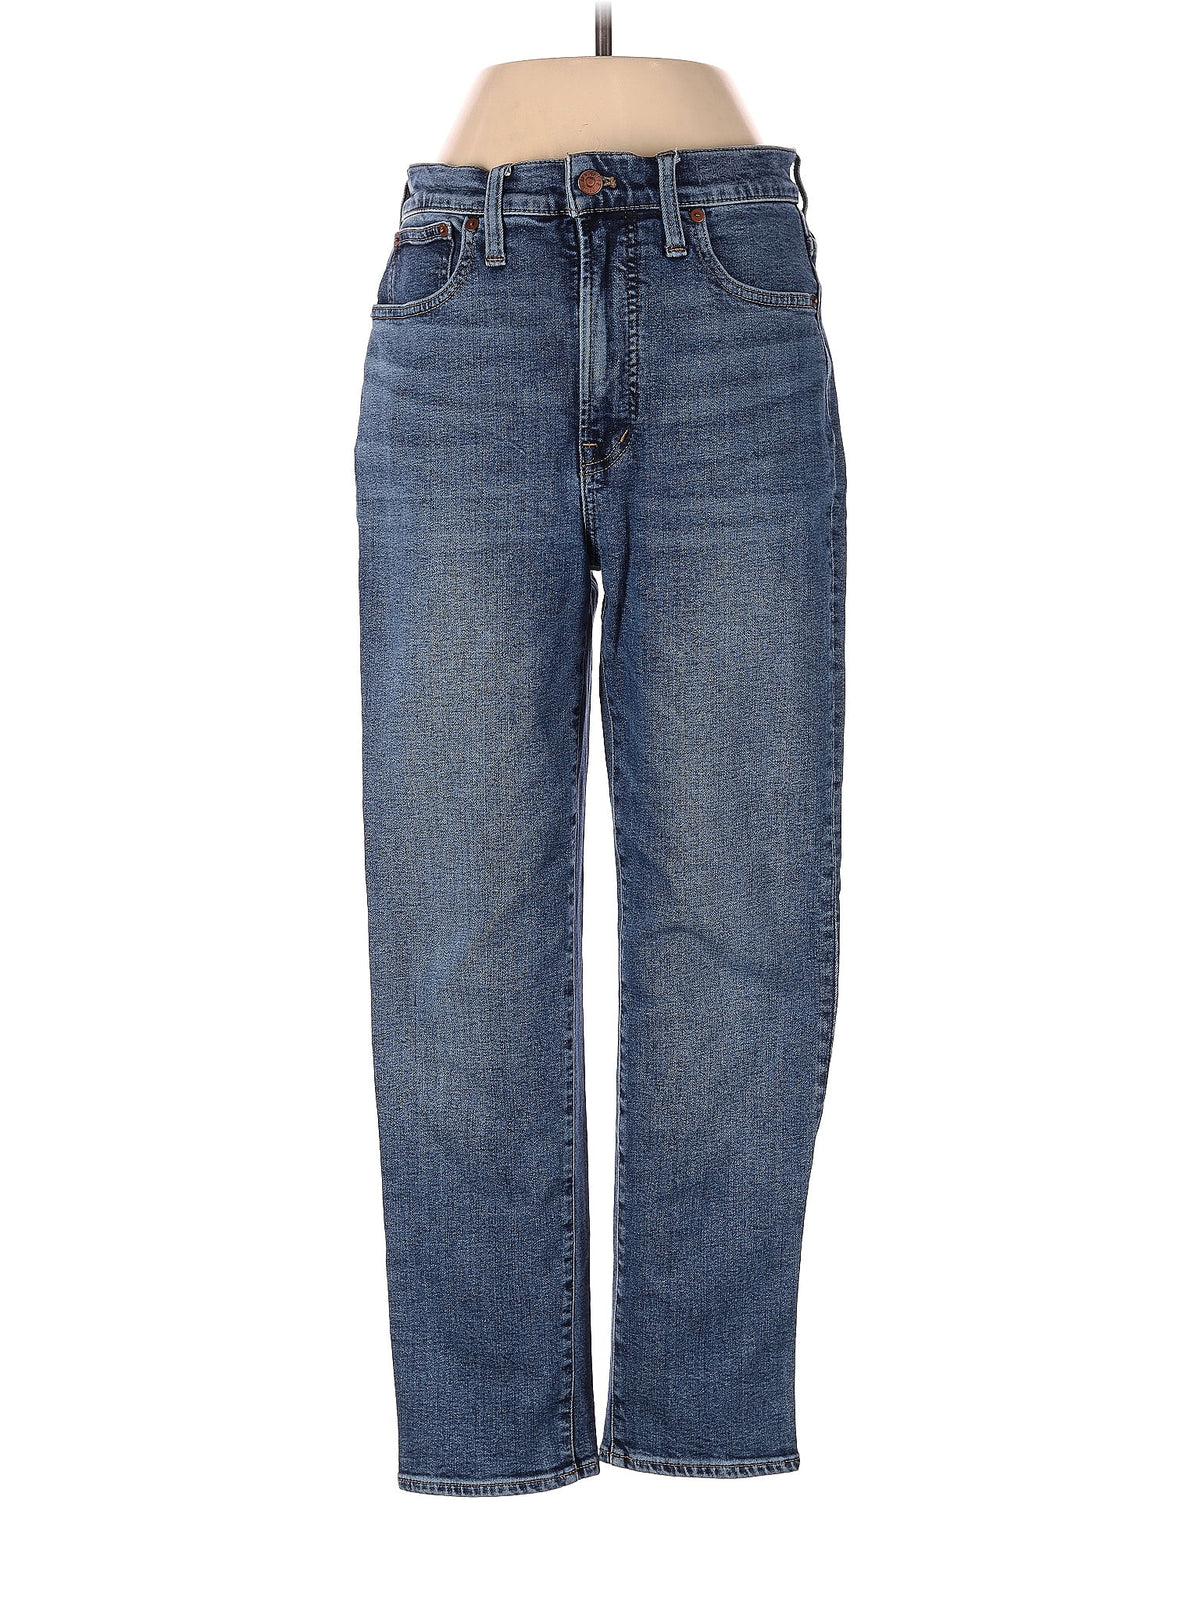 Mid-Rise Straight-leg Jeans in Medium Wash waist size - 27